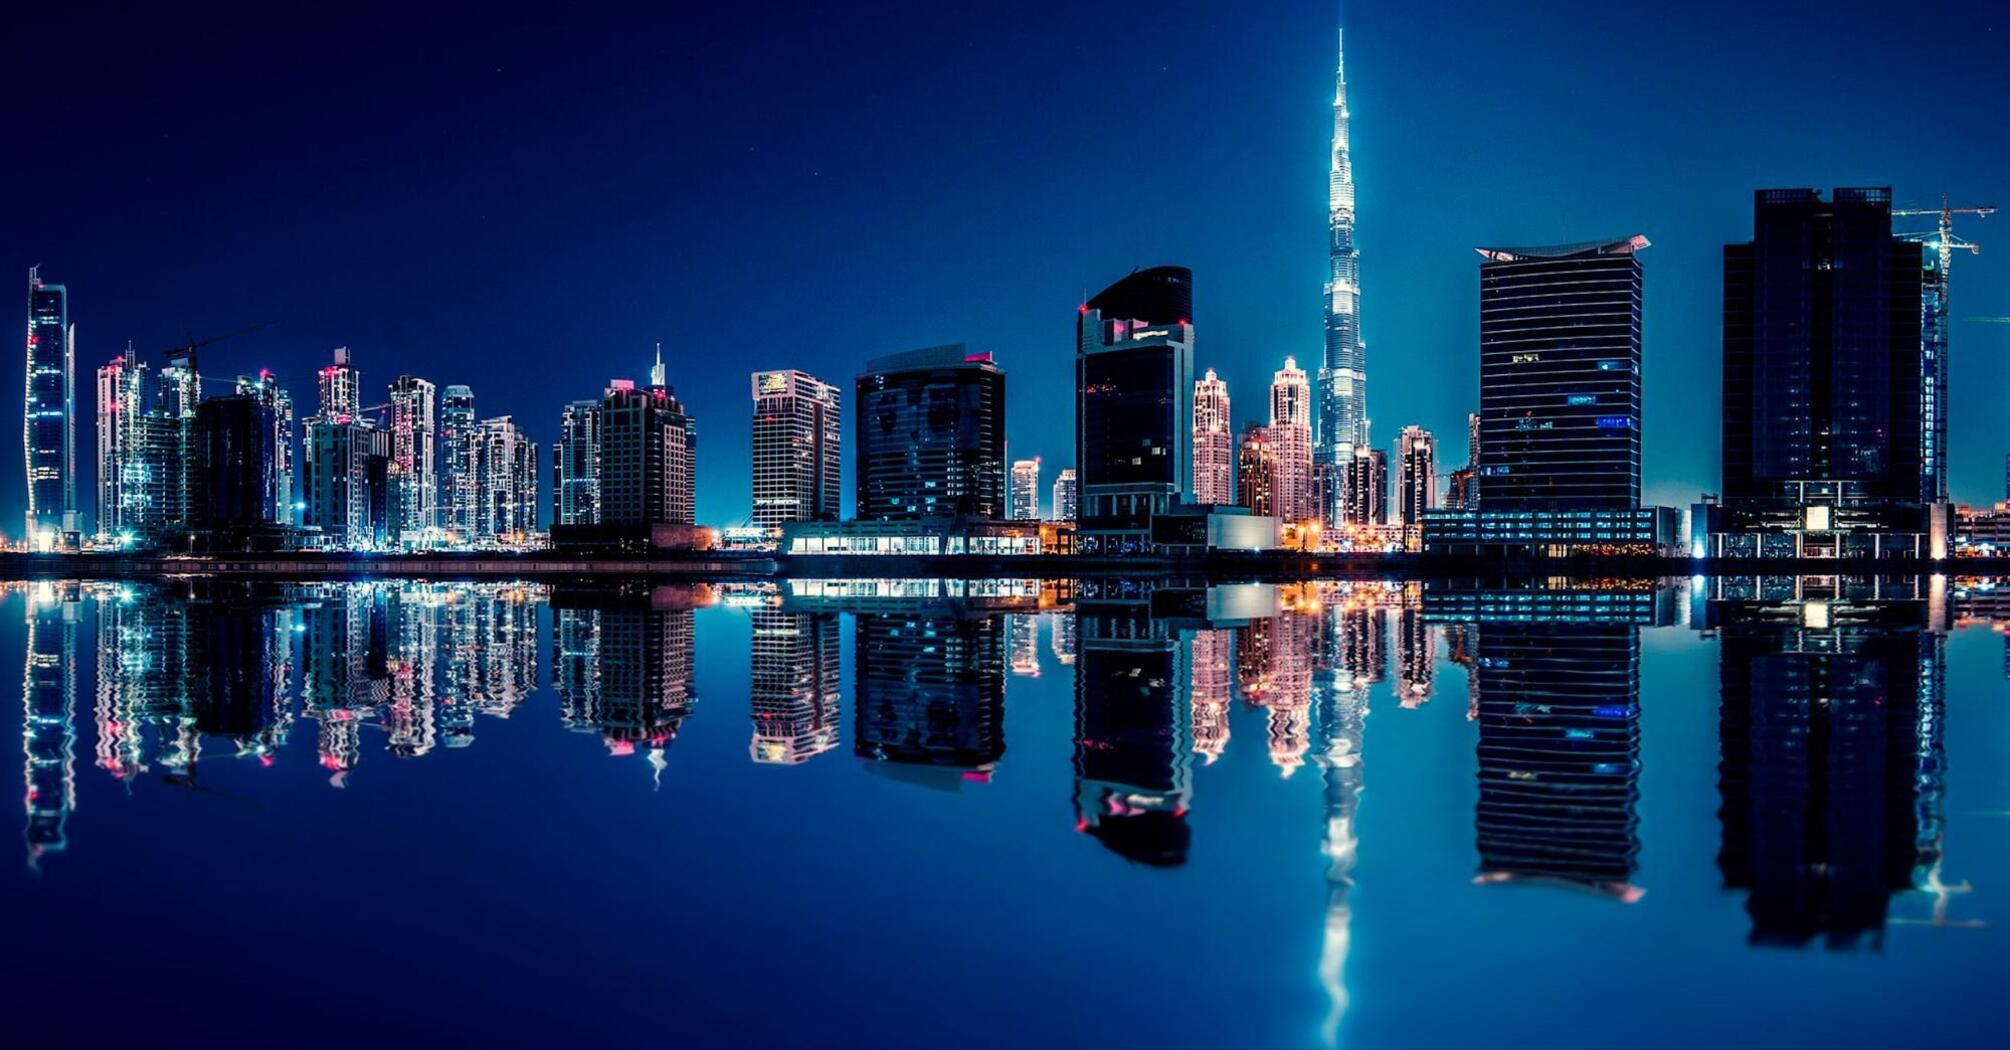 Night city of Dubai on the seashore 